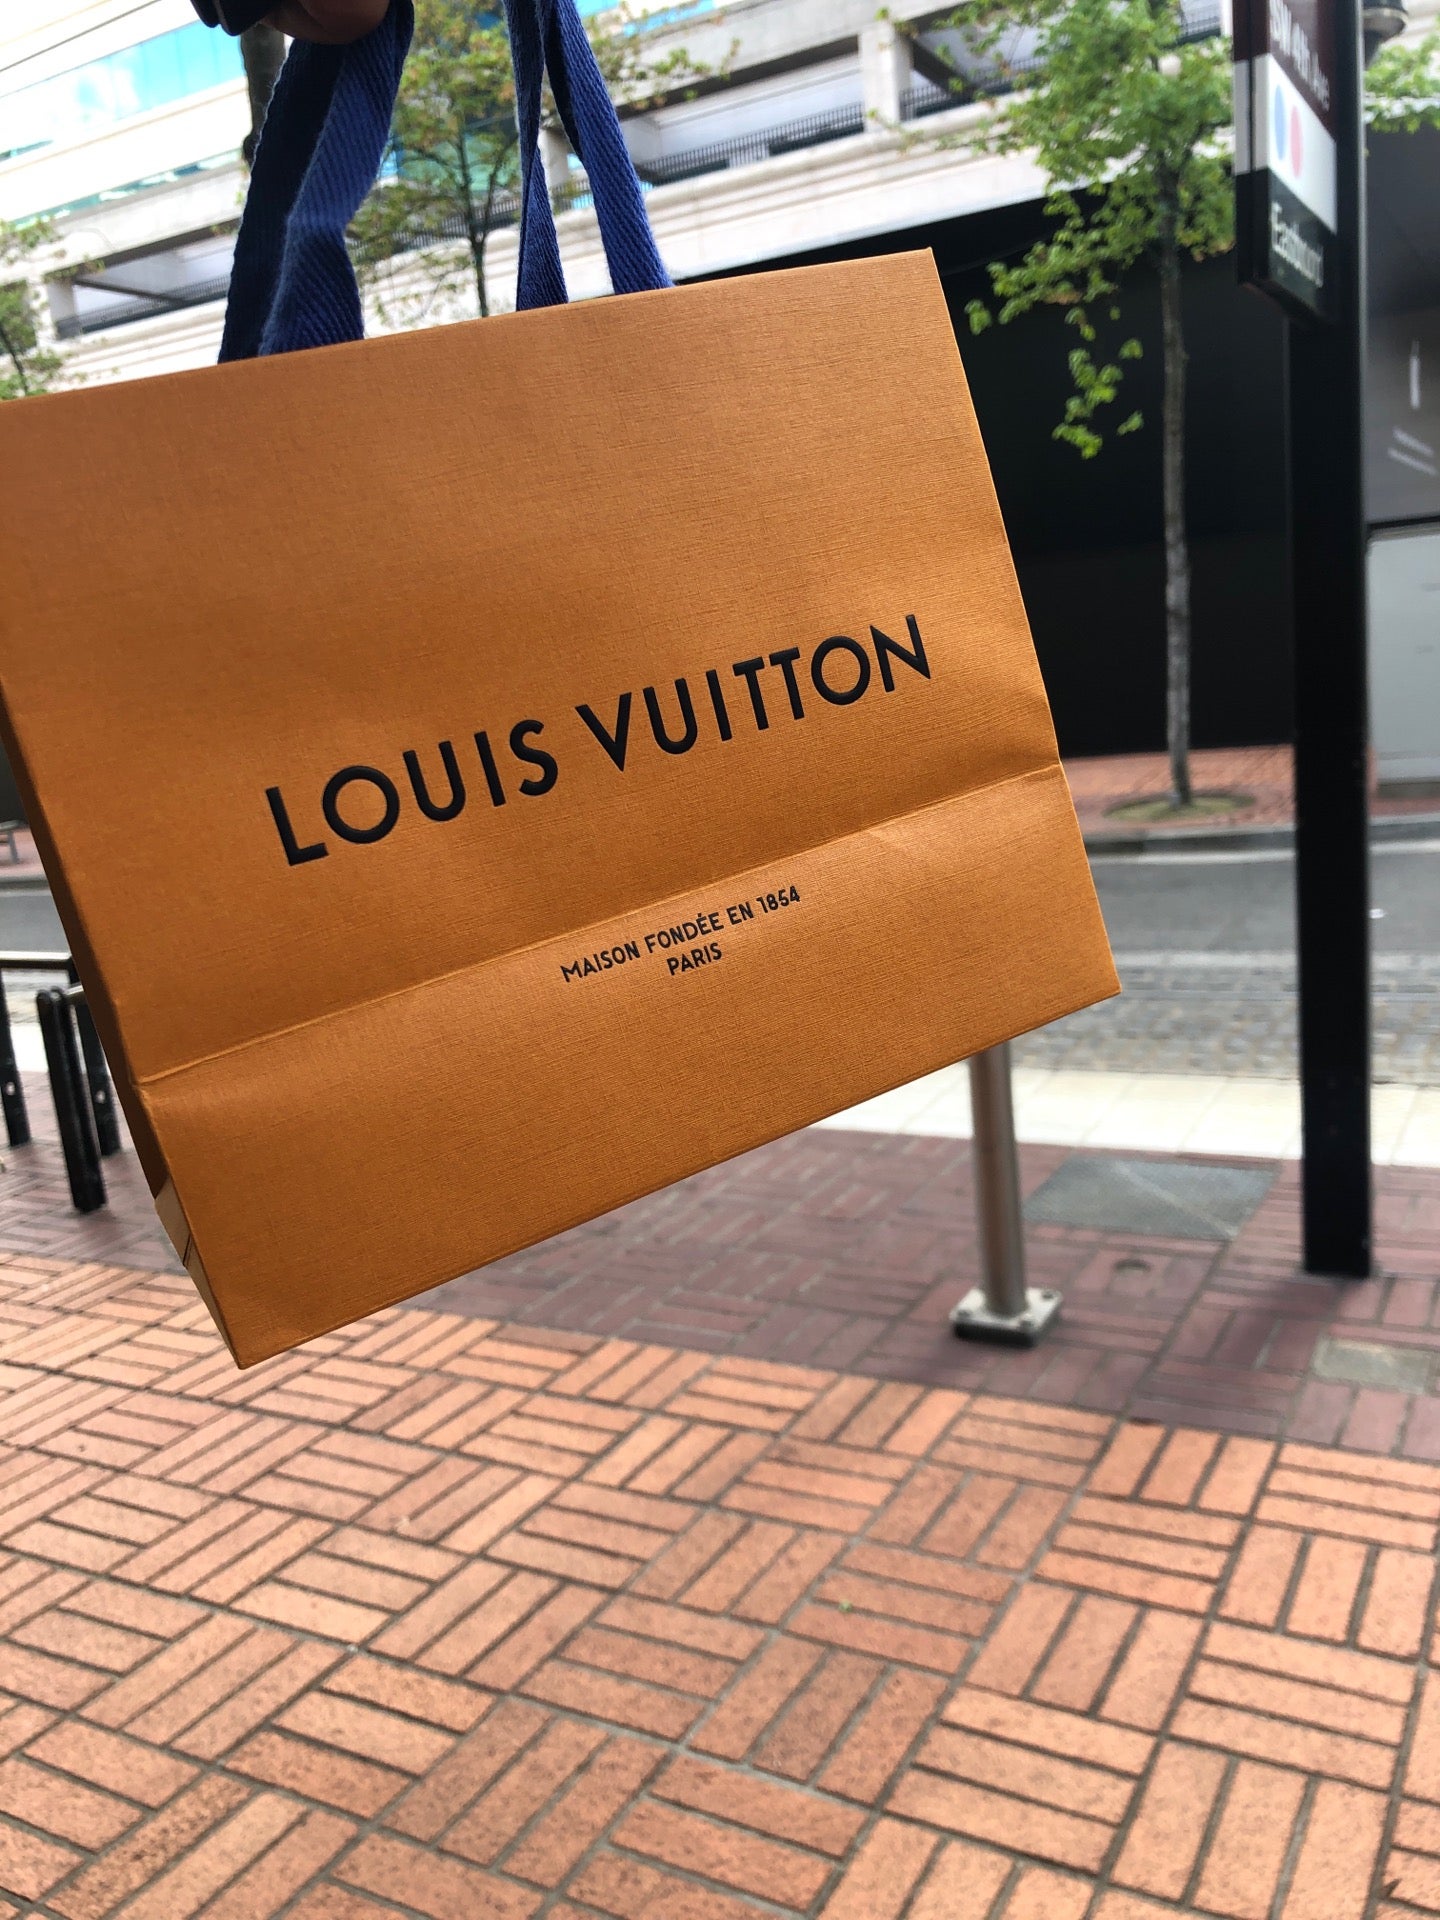 Original Louis Vuitton Maison Fondee en 1854 Paris Shopping Bag Small  7"